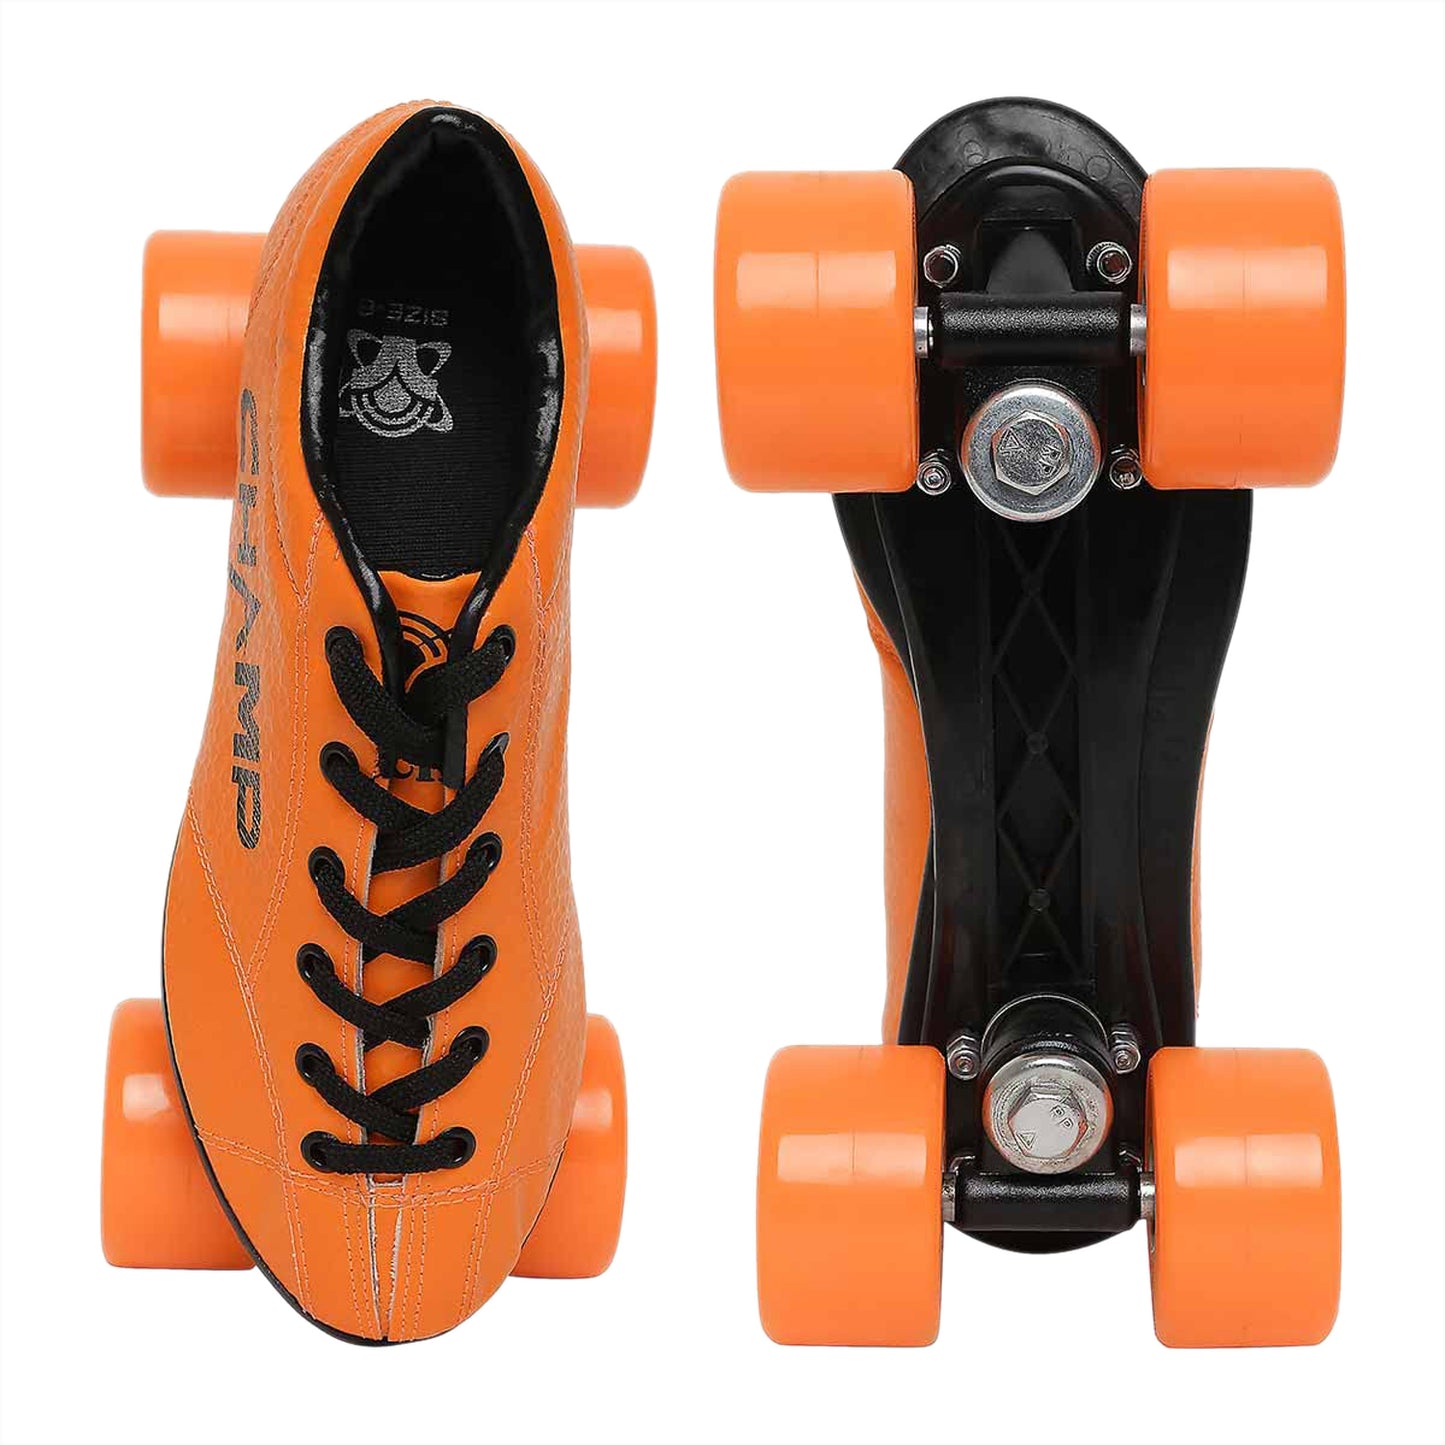 Vicky Champ Shoe Skates - Orange - Best Price online Prokicksports.com